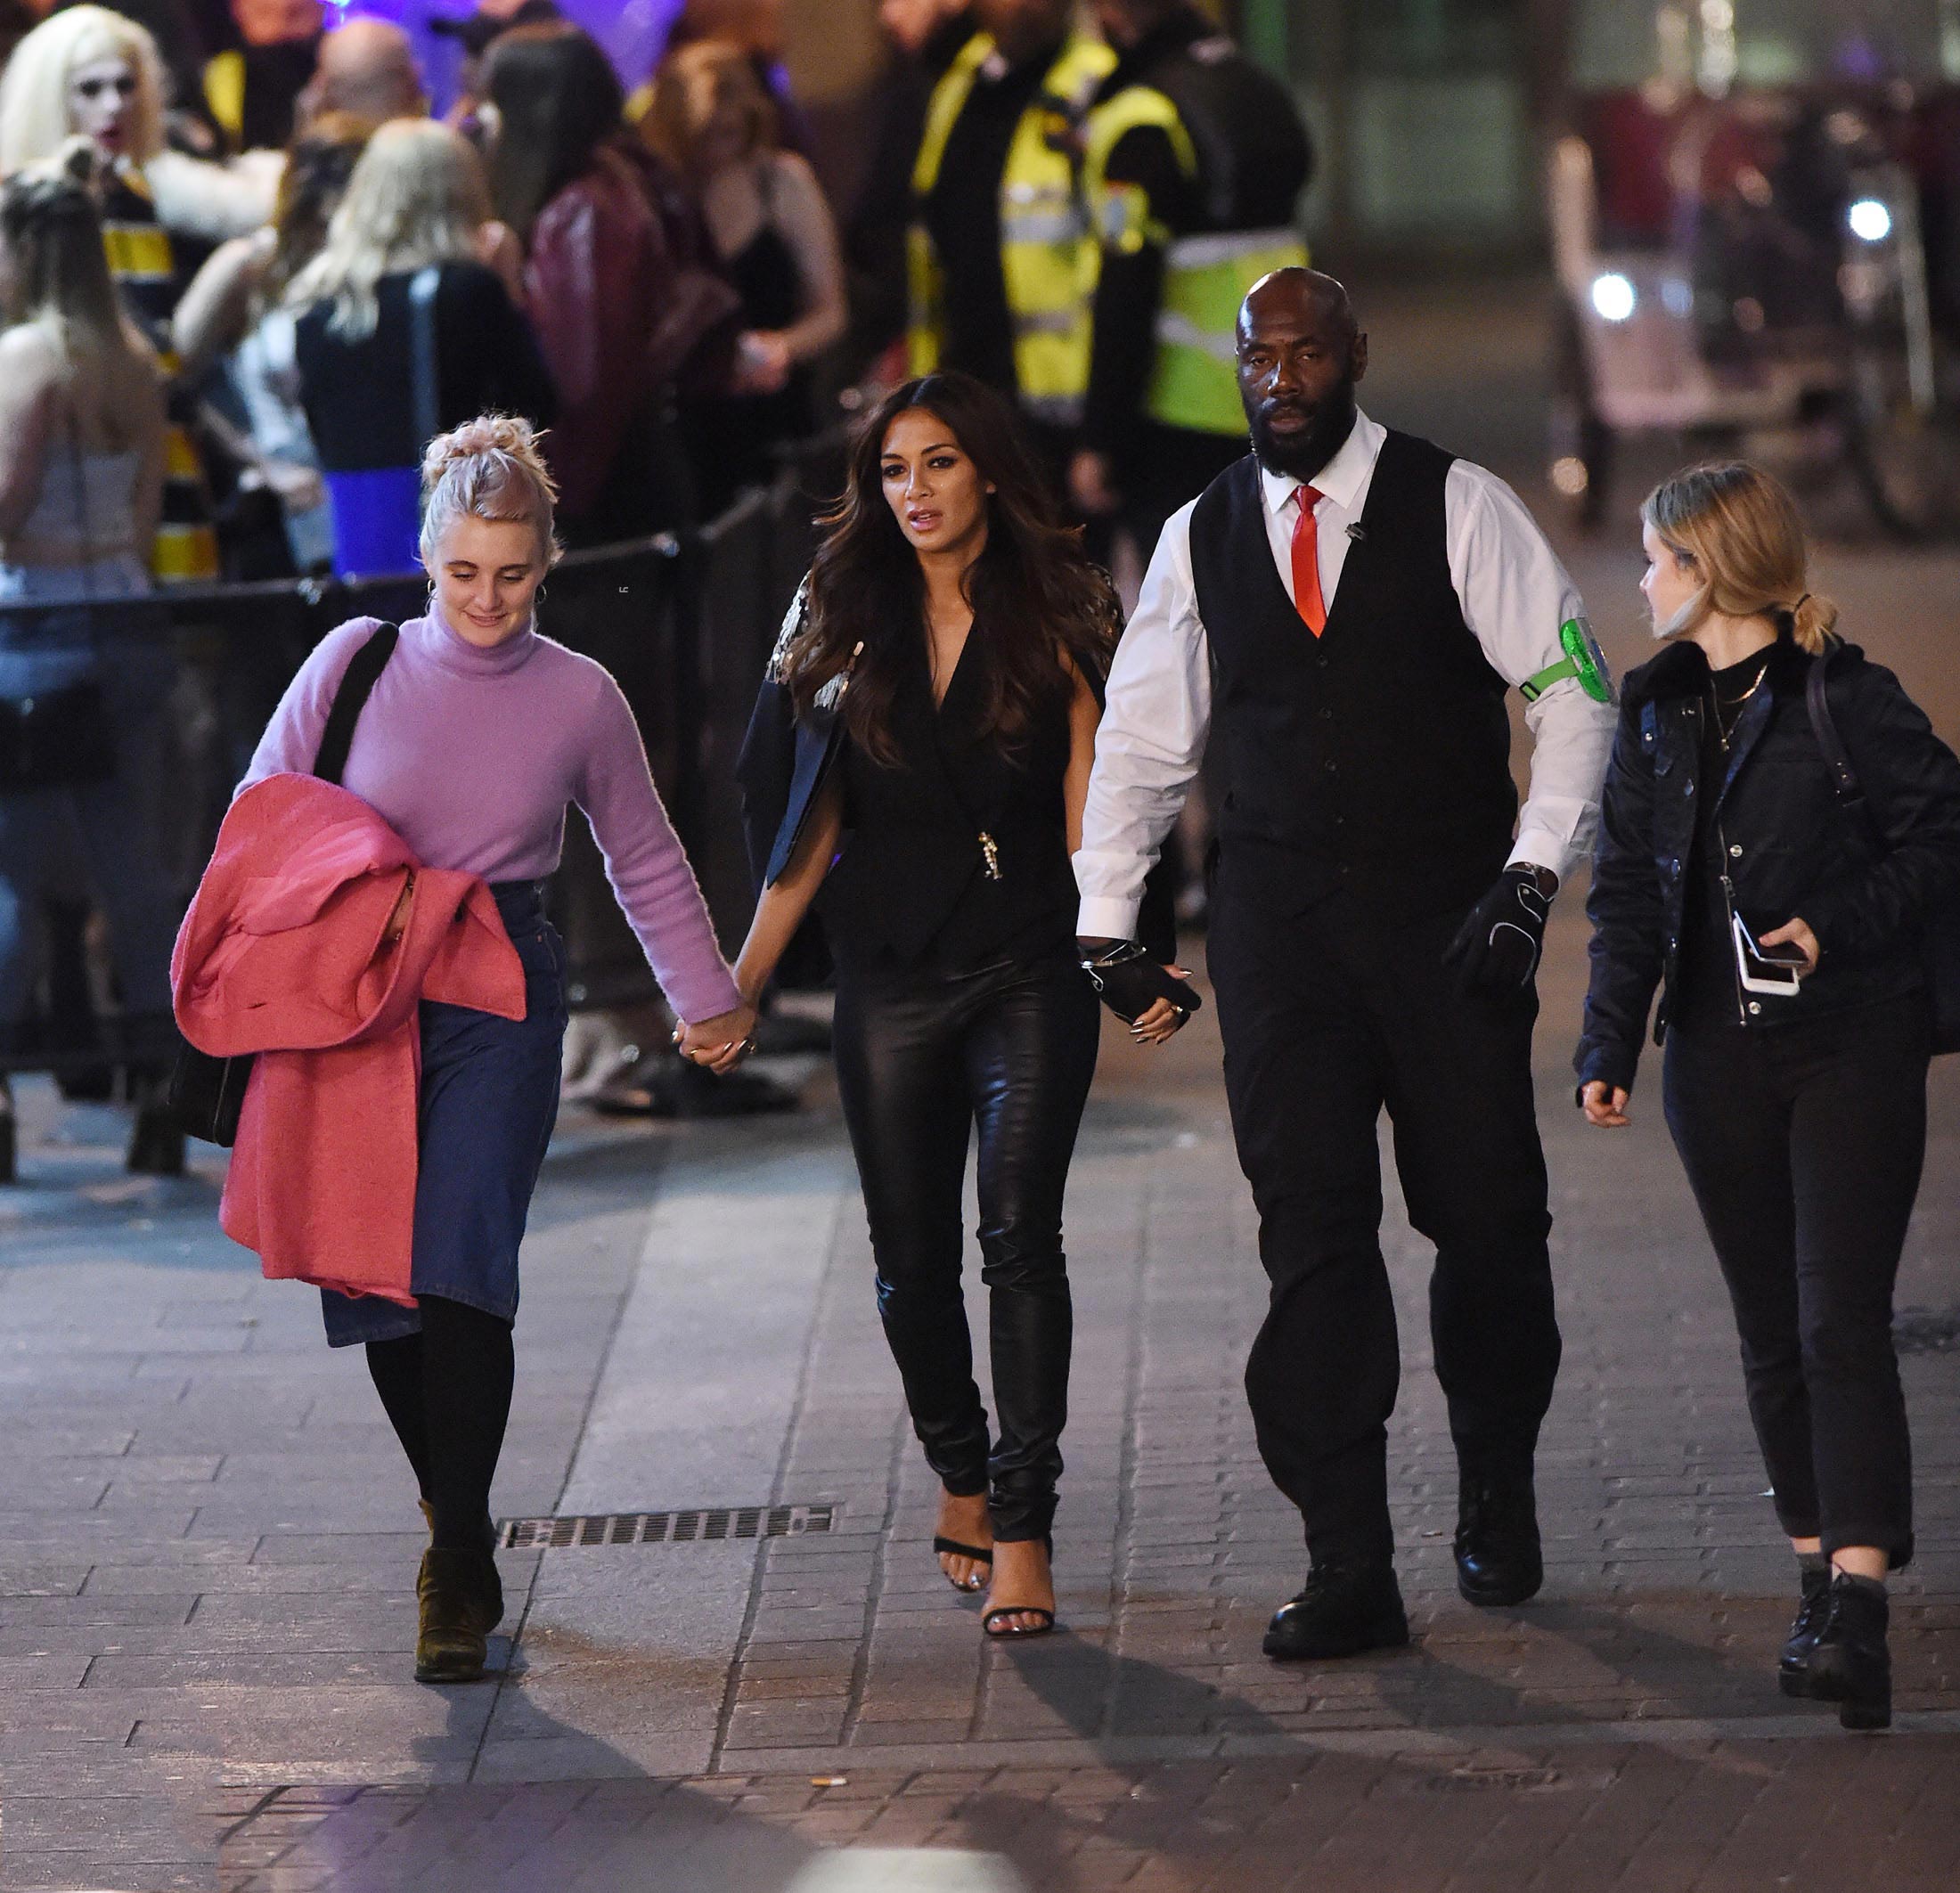 Nicole Scherzinger leaving the Wembley Arena